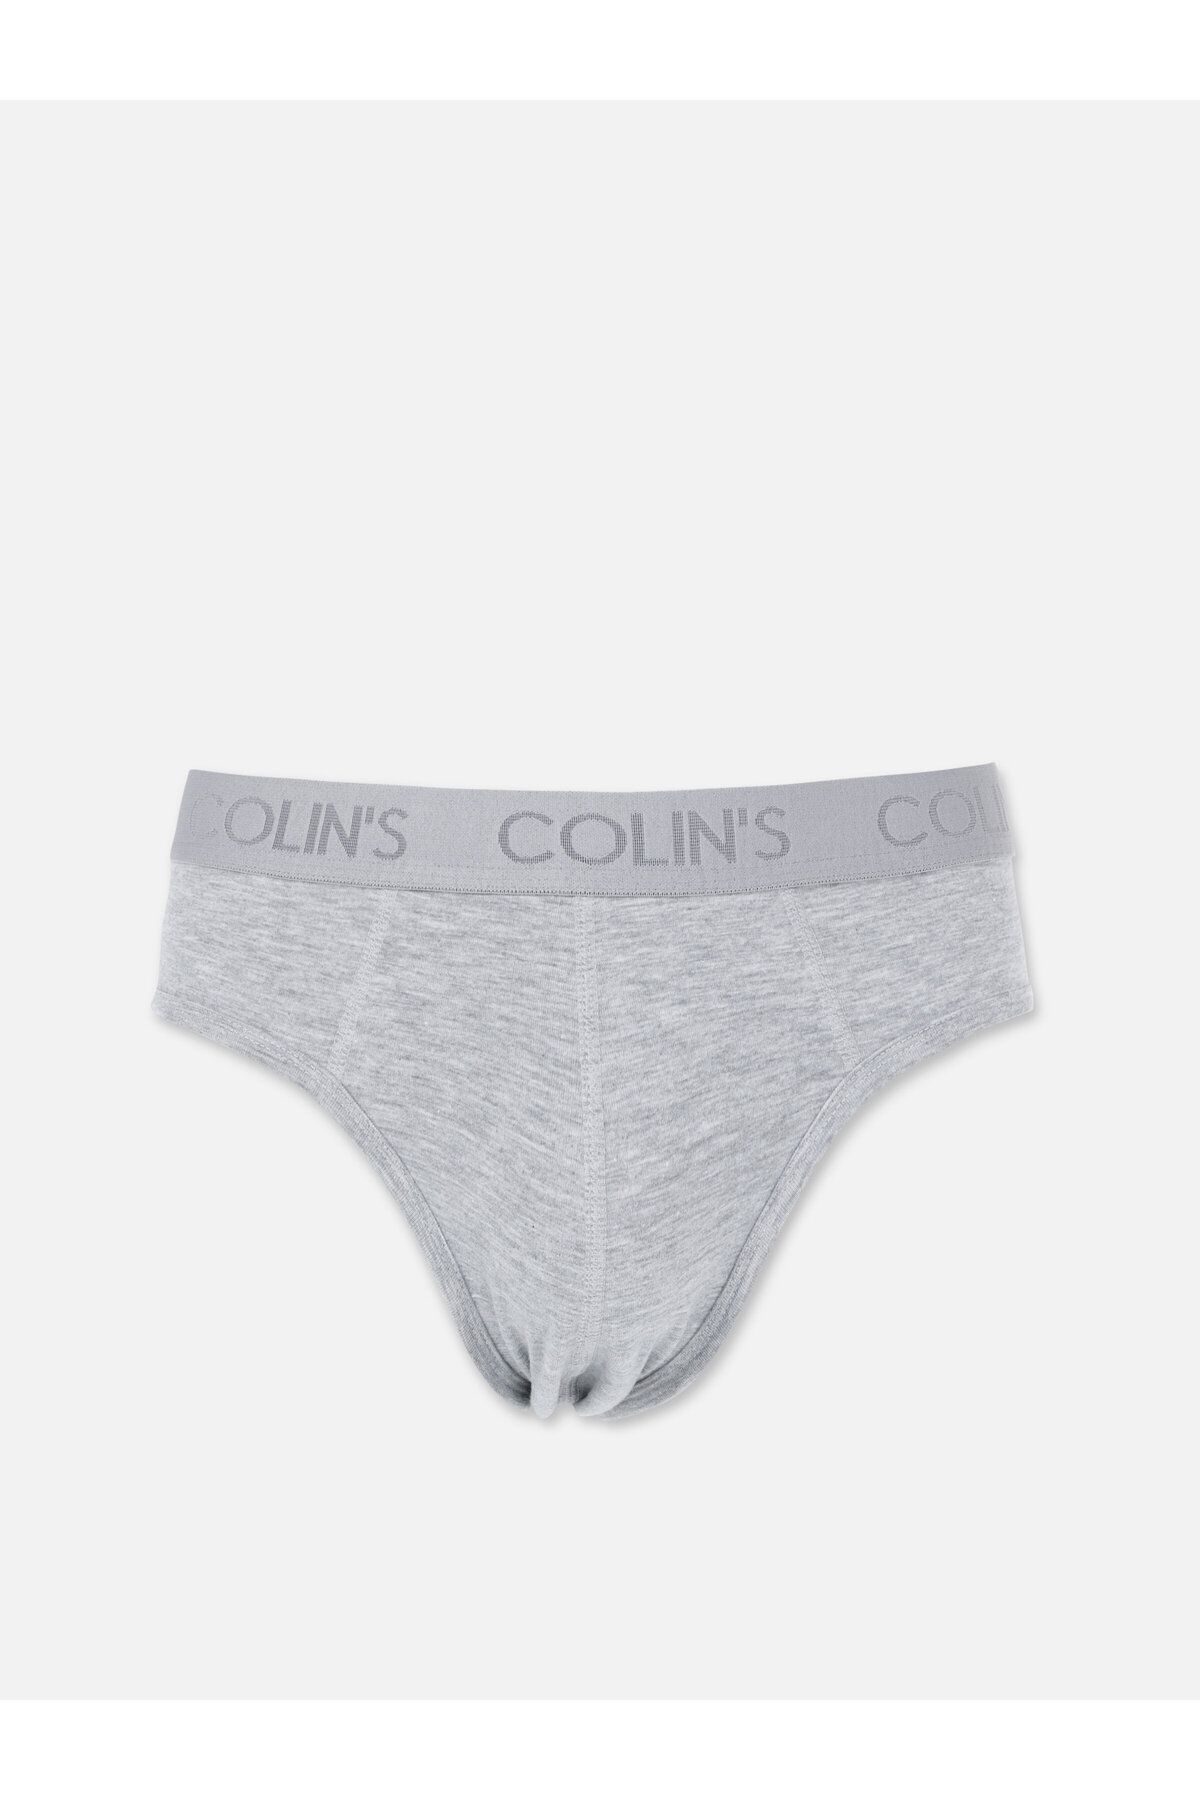 Colin’s Gri Erkek İç Giyim Cl1068359